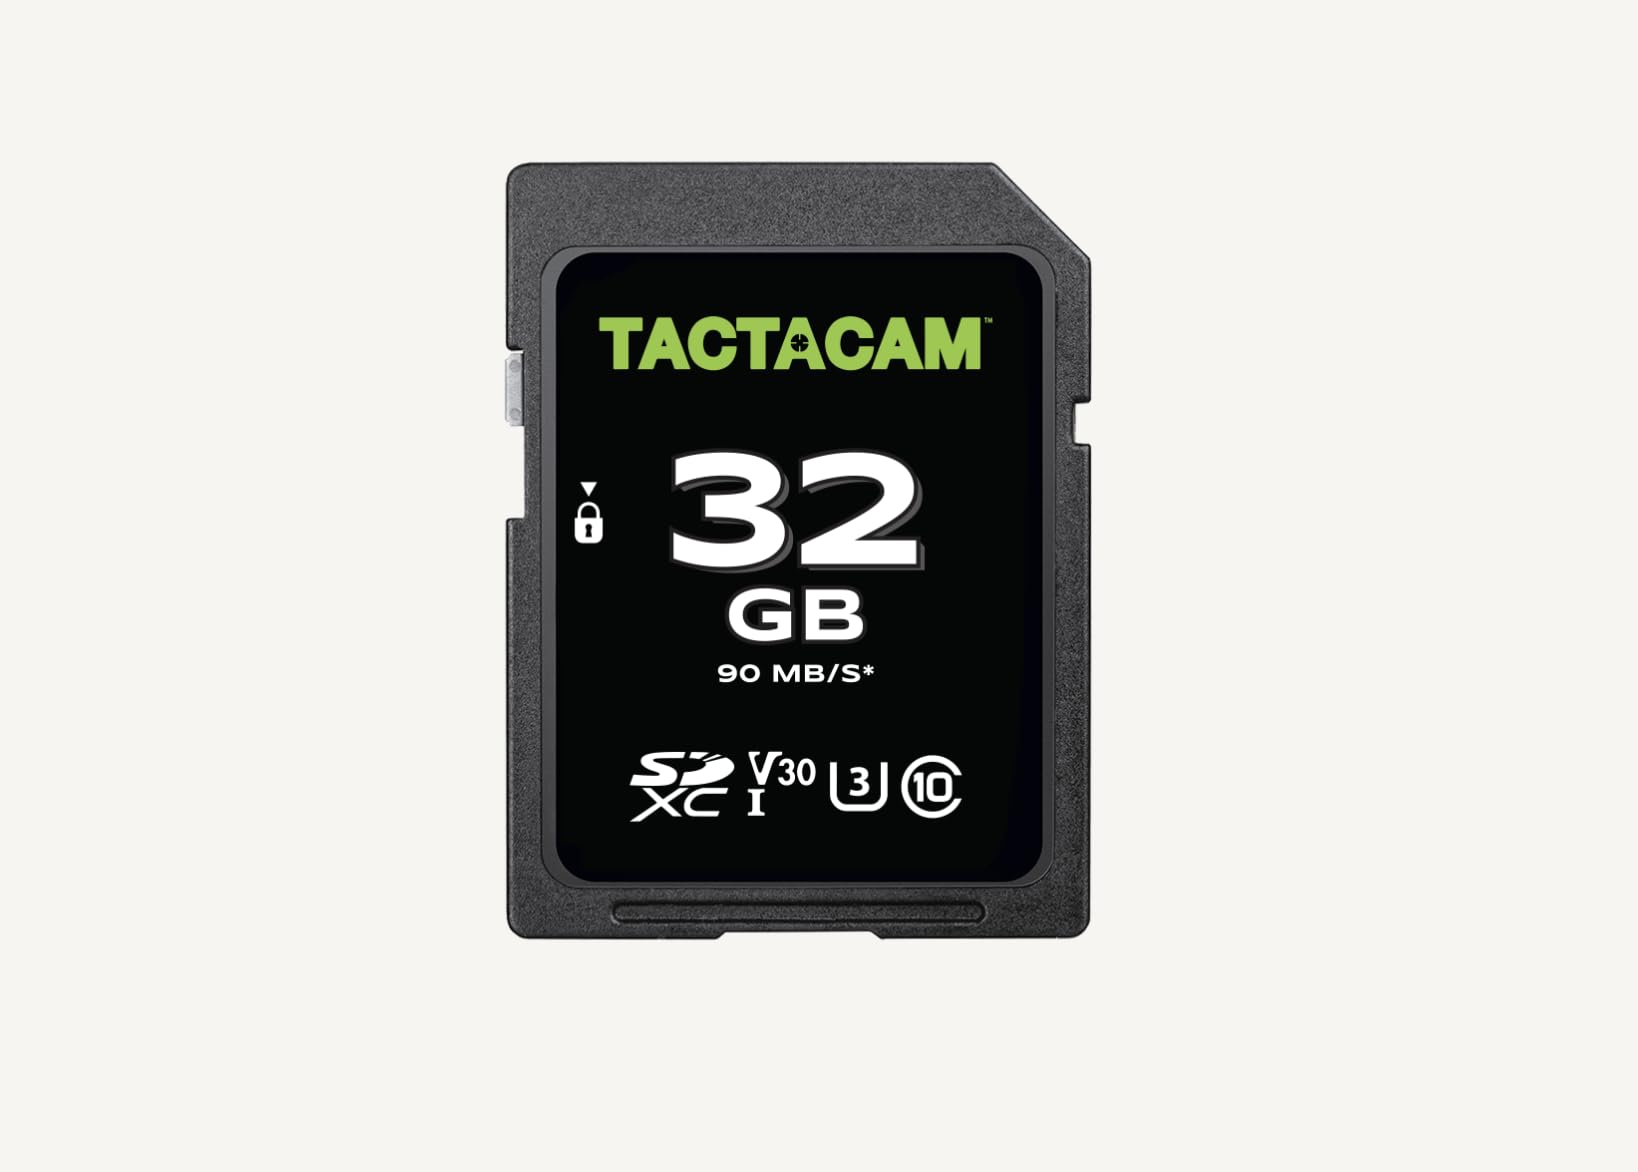 Tactacam Reveal 32GB SD Card (2 Pack)